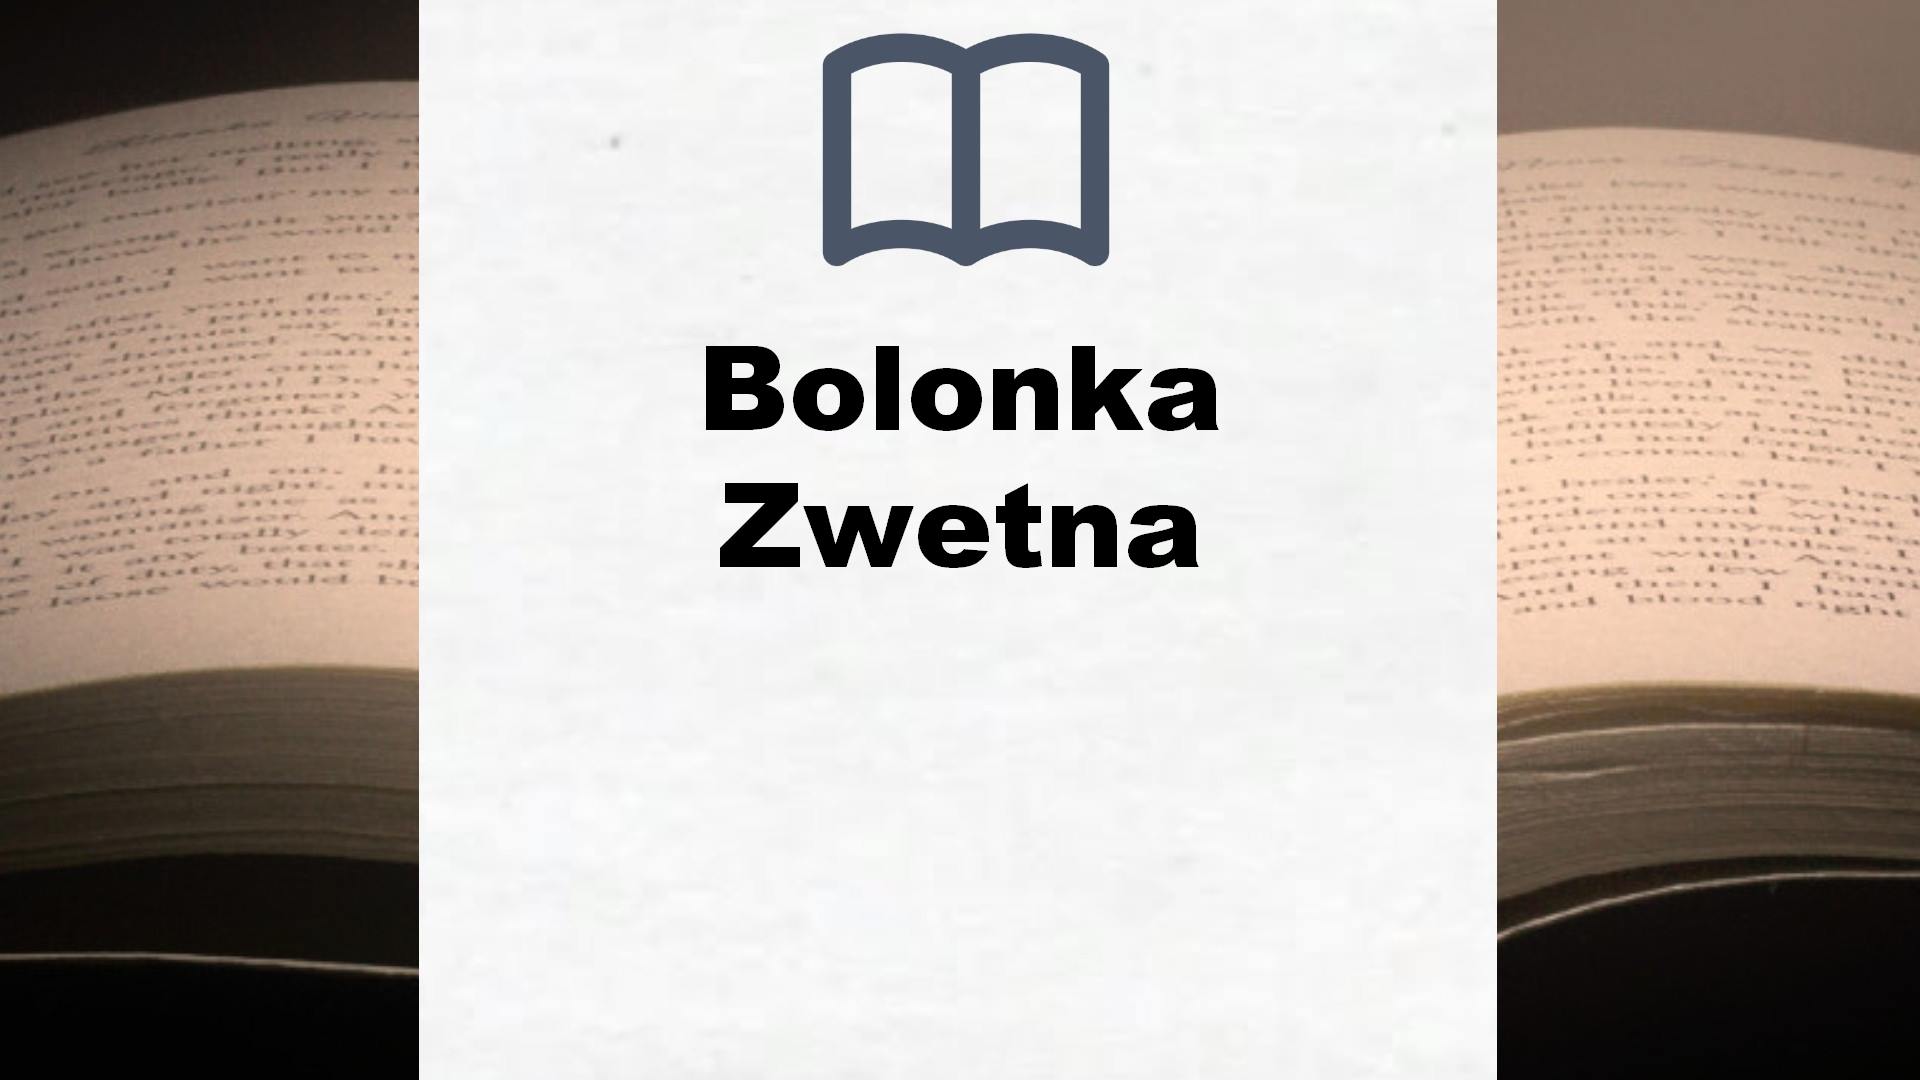 Bücher über Bolonka Zwetna